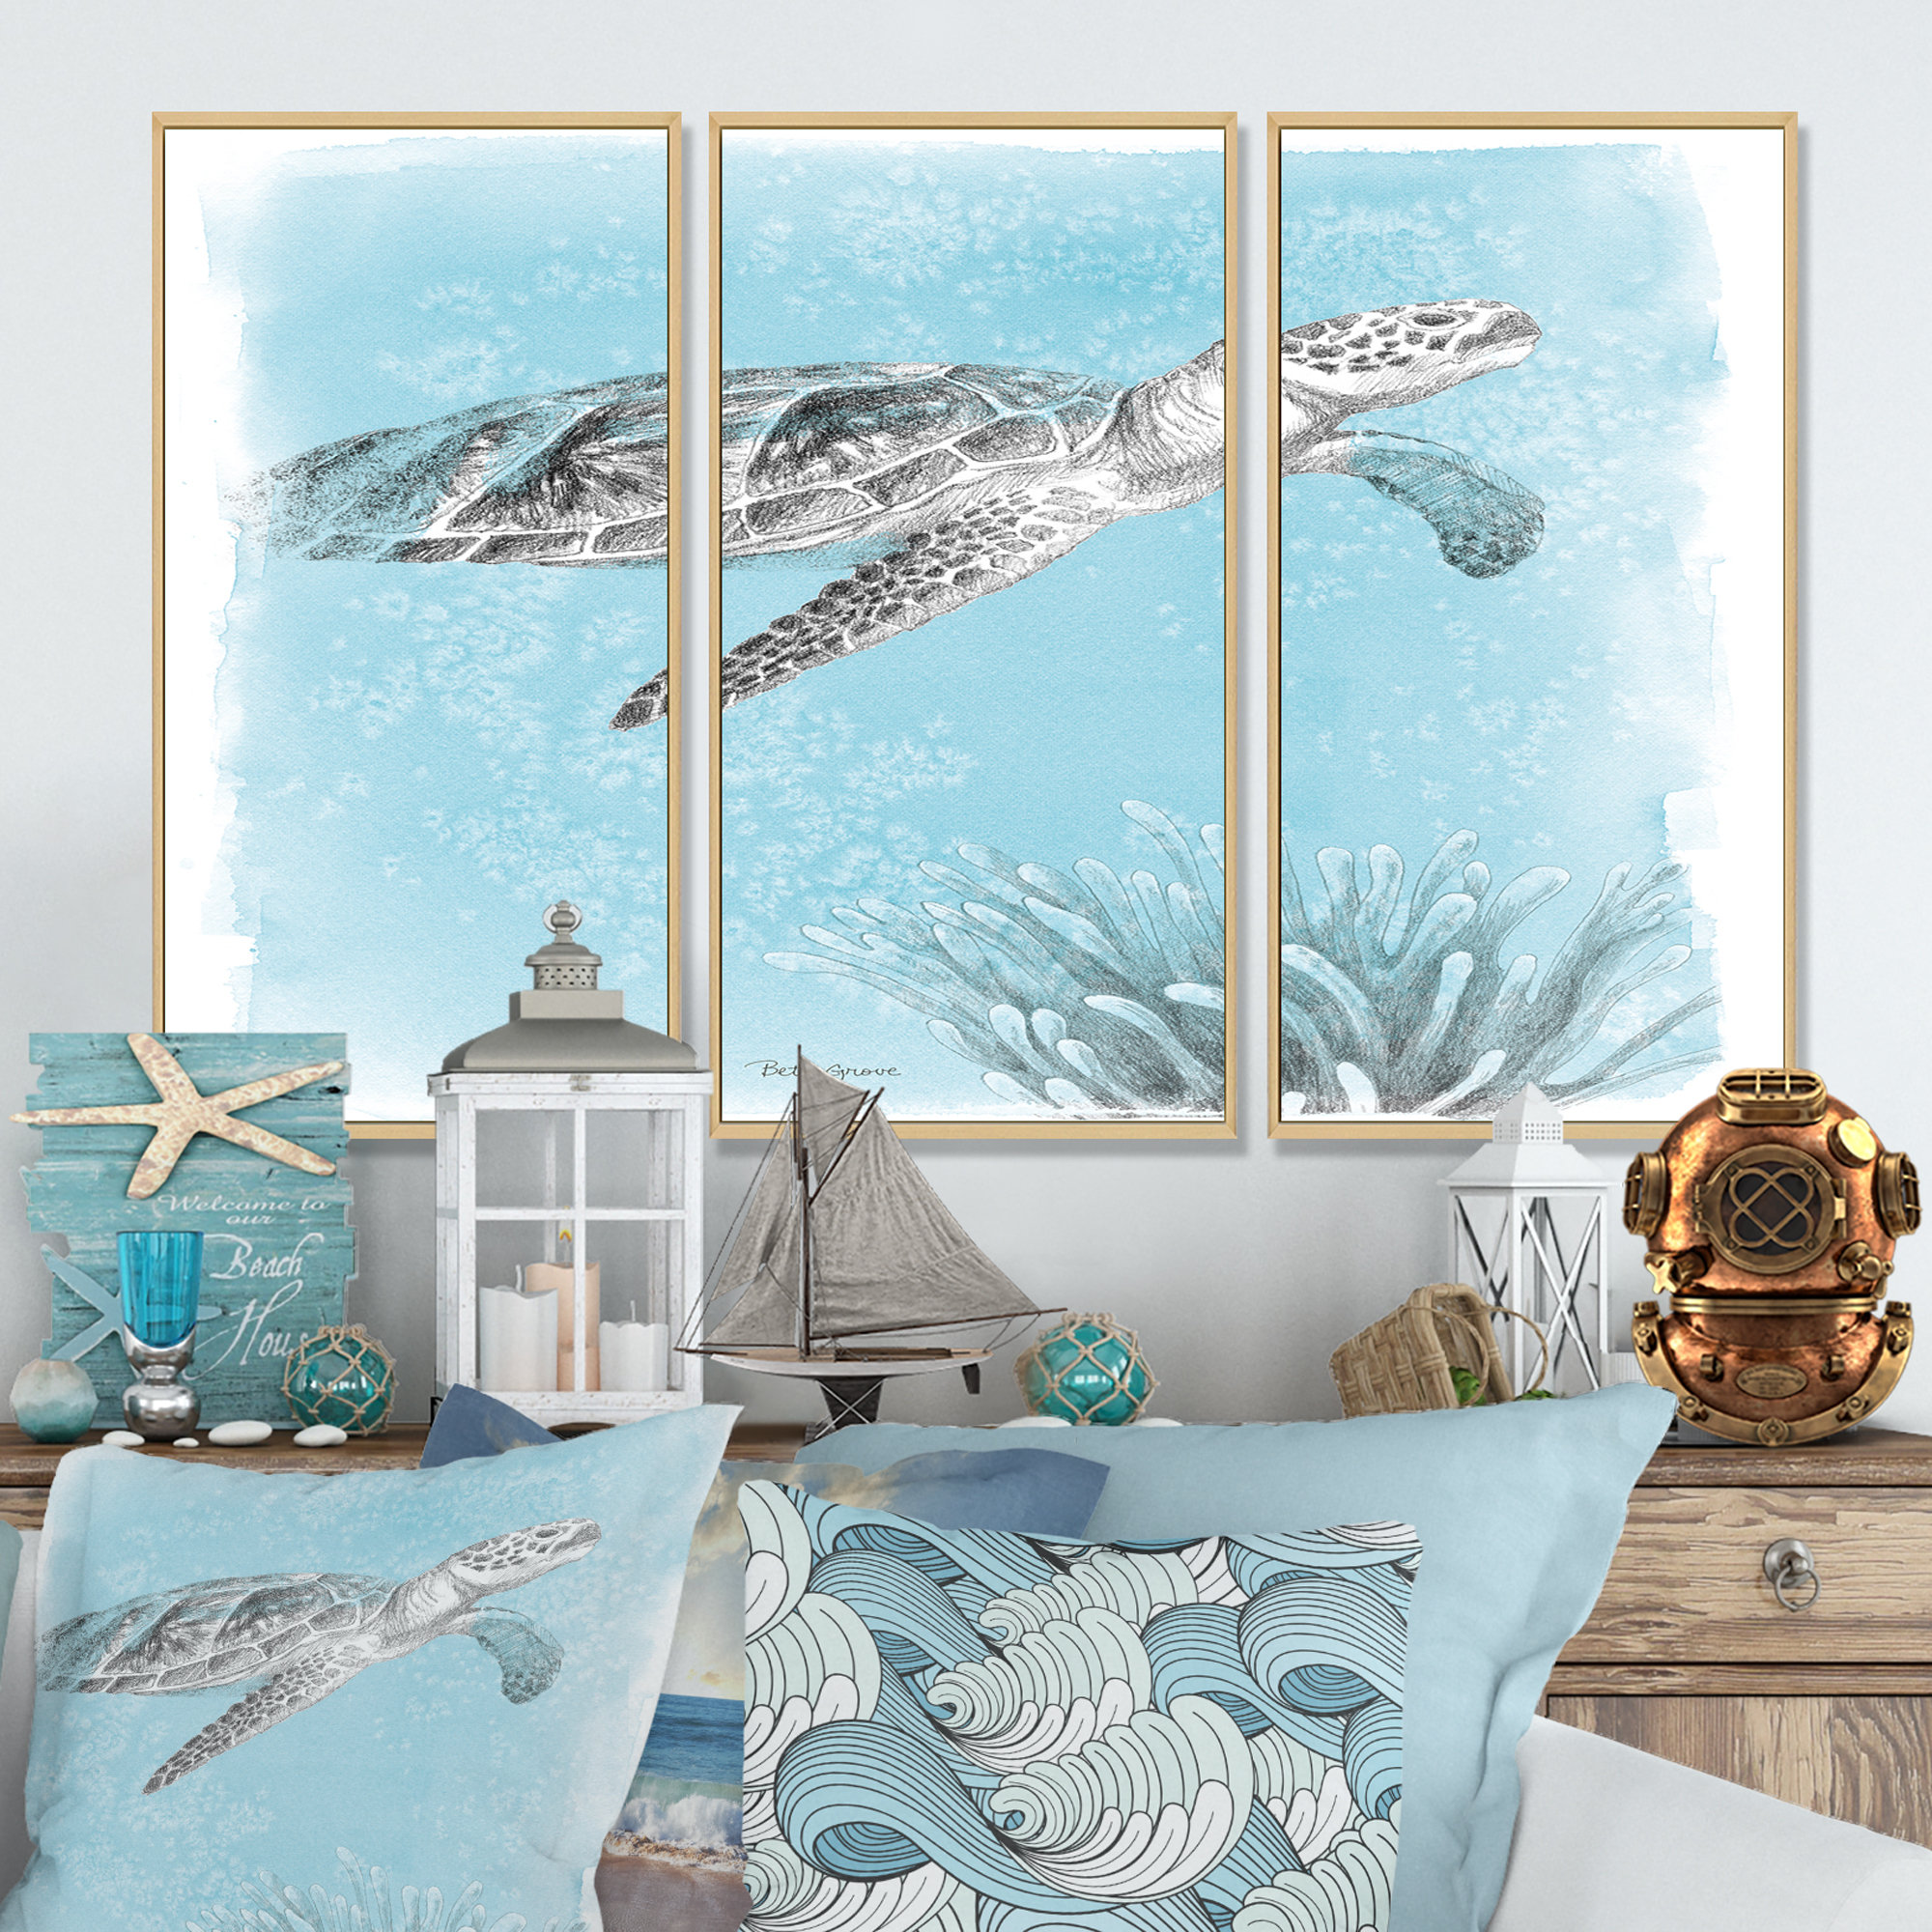 DesignArt Coastal Sea Life I Turtle Sketches Framed On Canvas Pieces Print  Wayfair